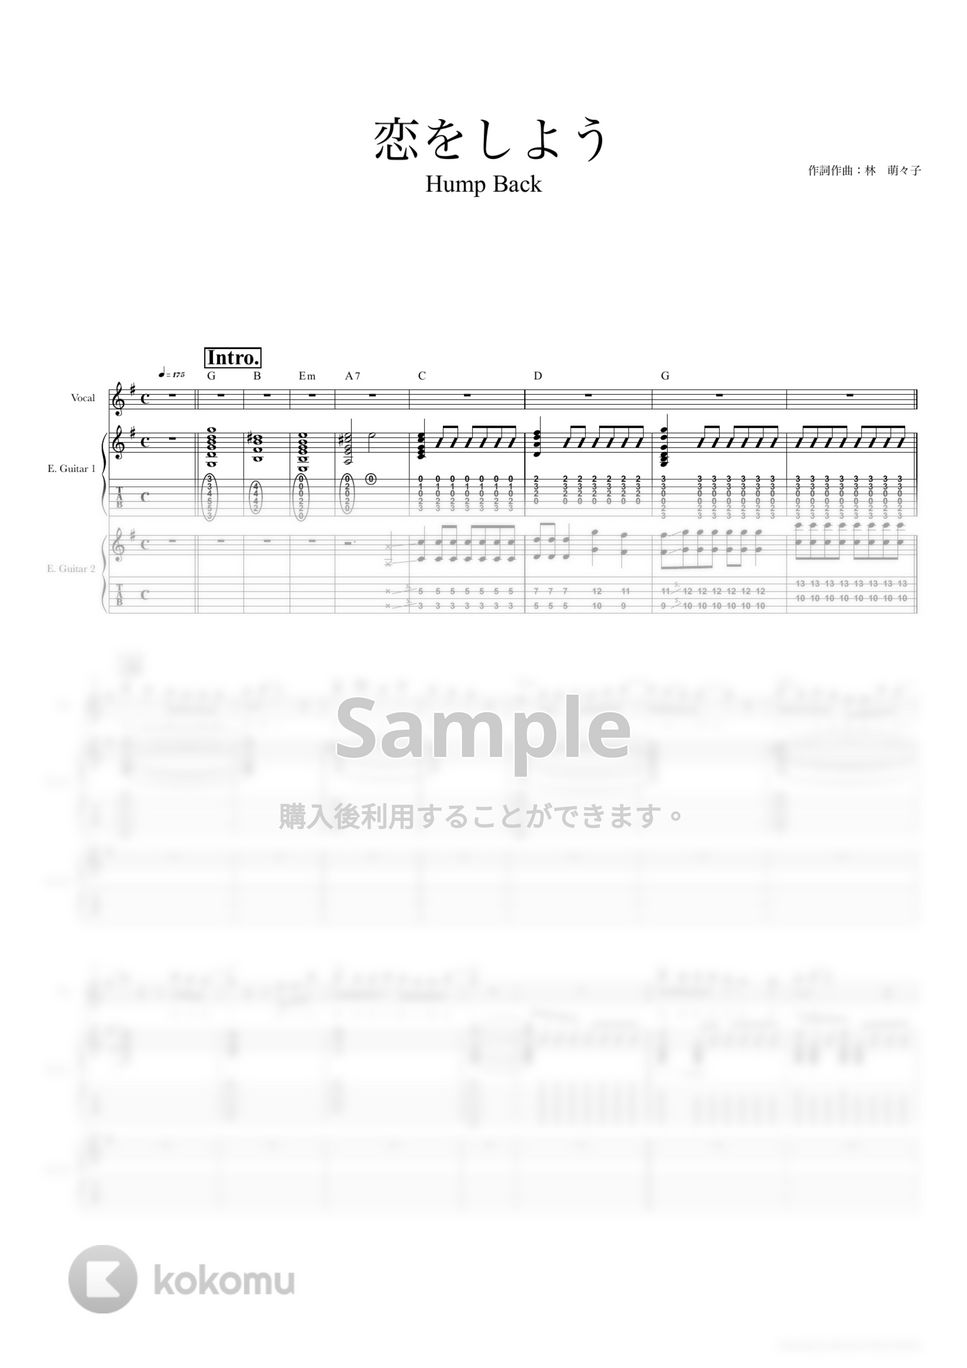 Hump Back - 恋をしよう (ギタースコア・歌詞・コード付き) by TRIAD GUITAR SCHOOL